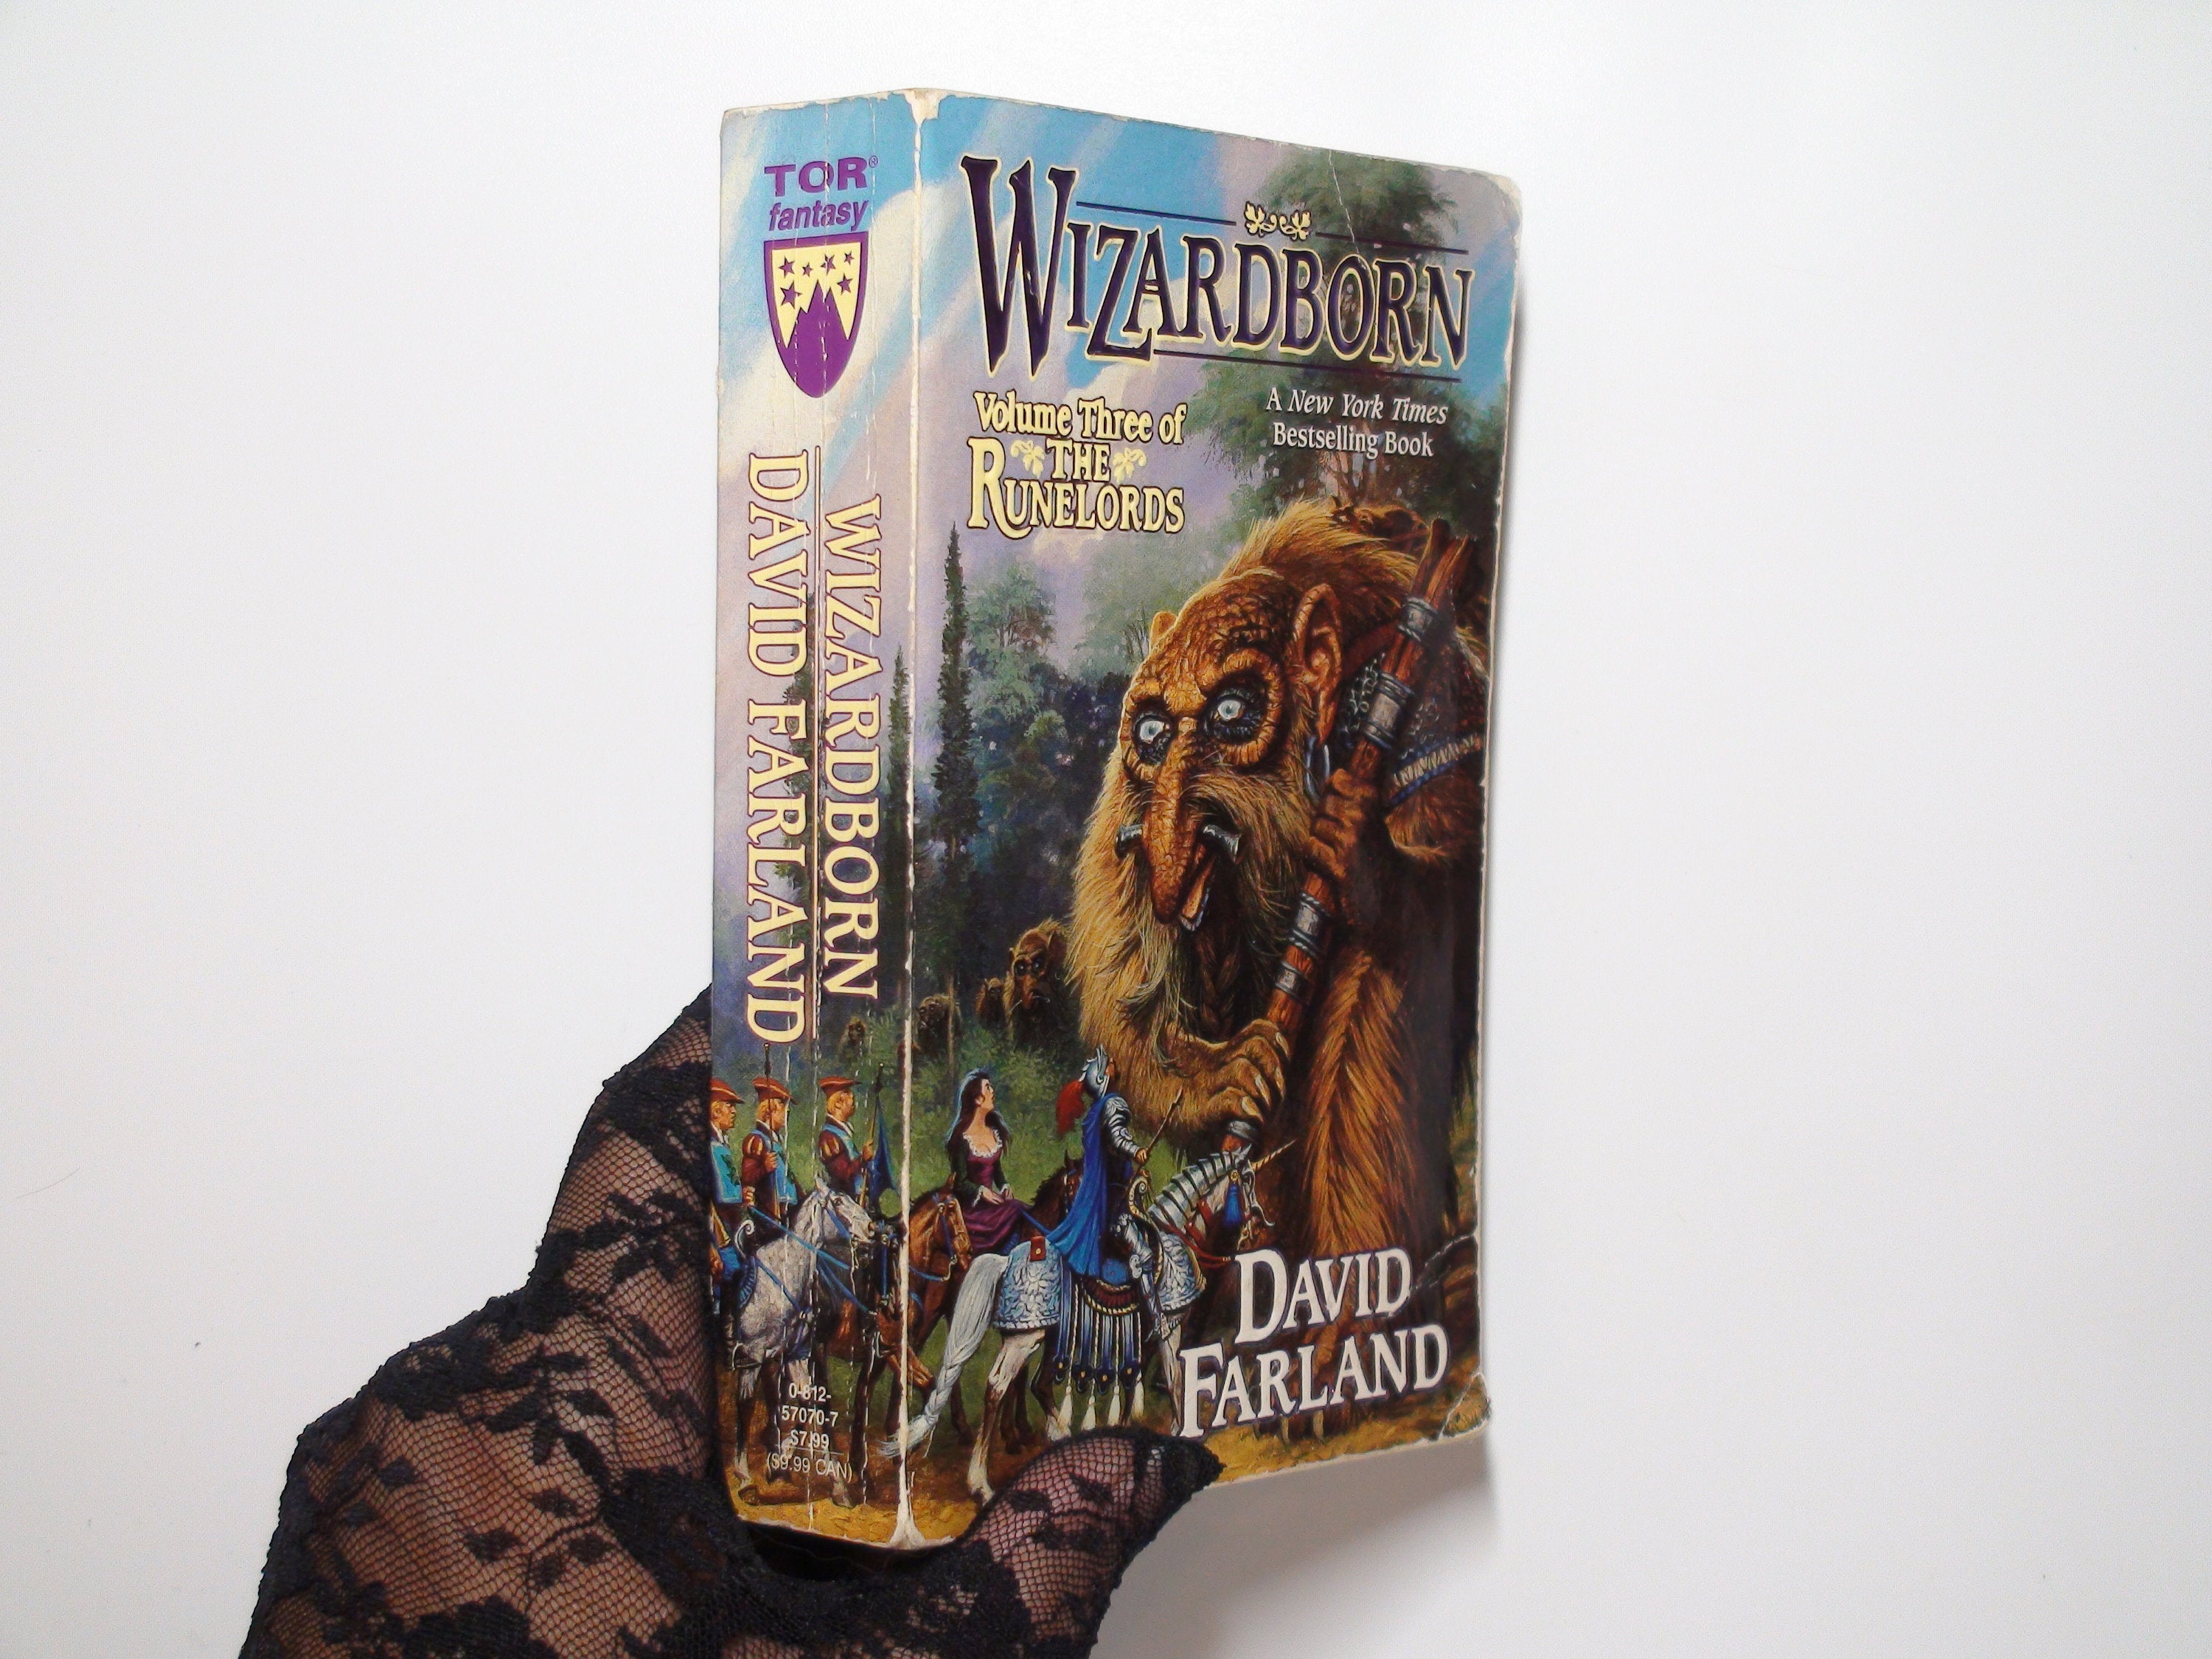 The Runelords, Wizardborn by David Farland, Paperback